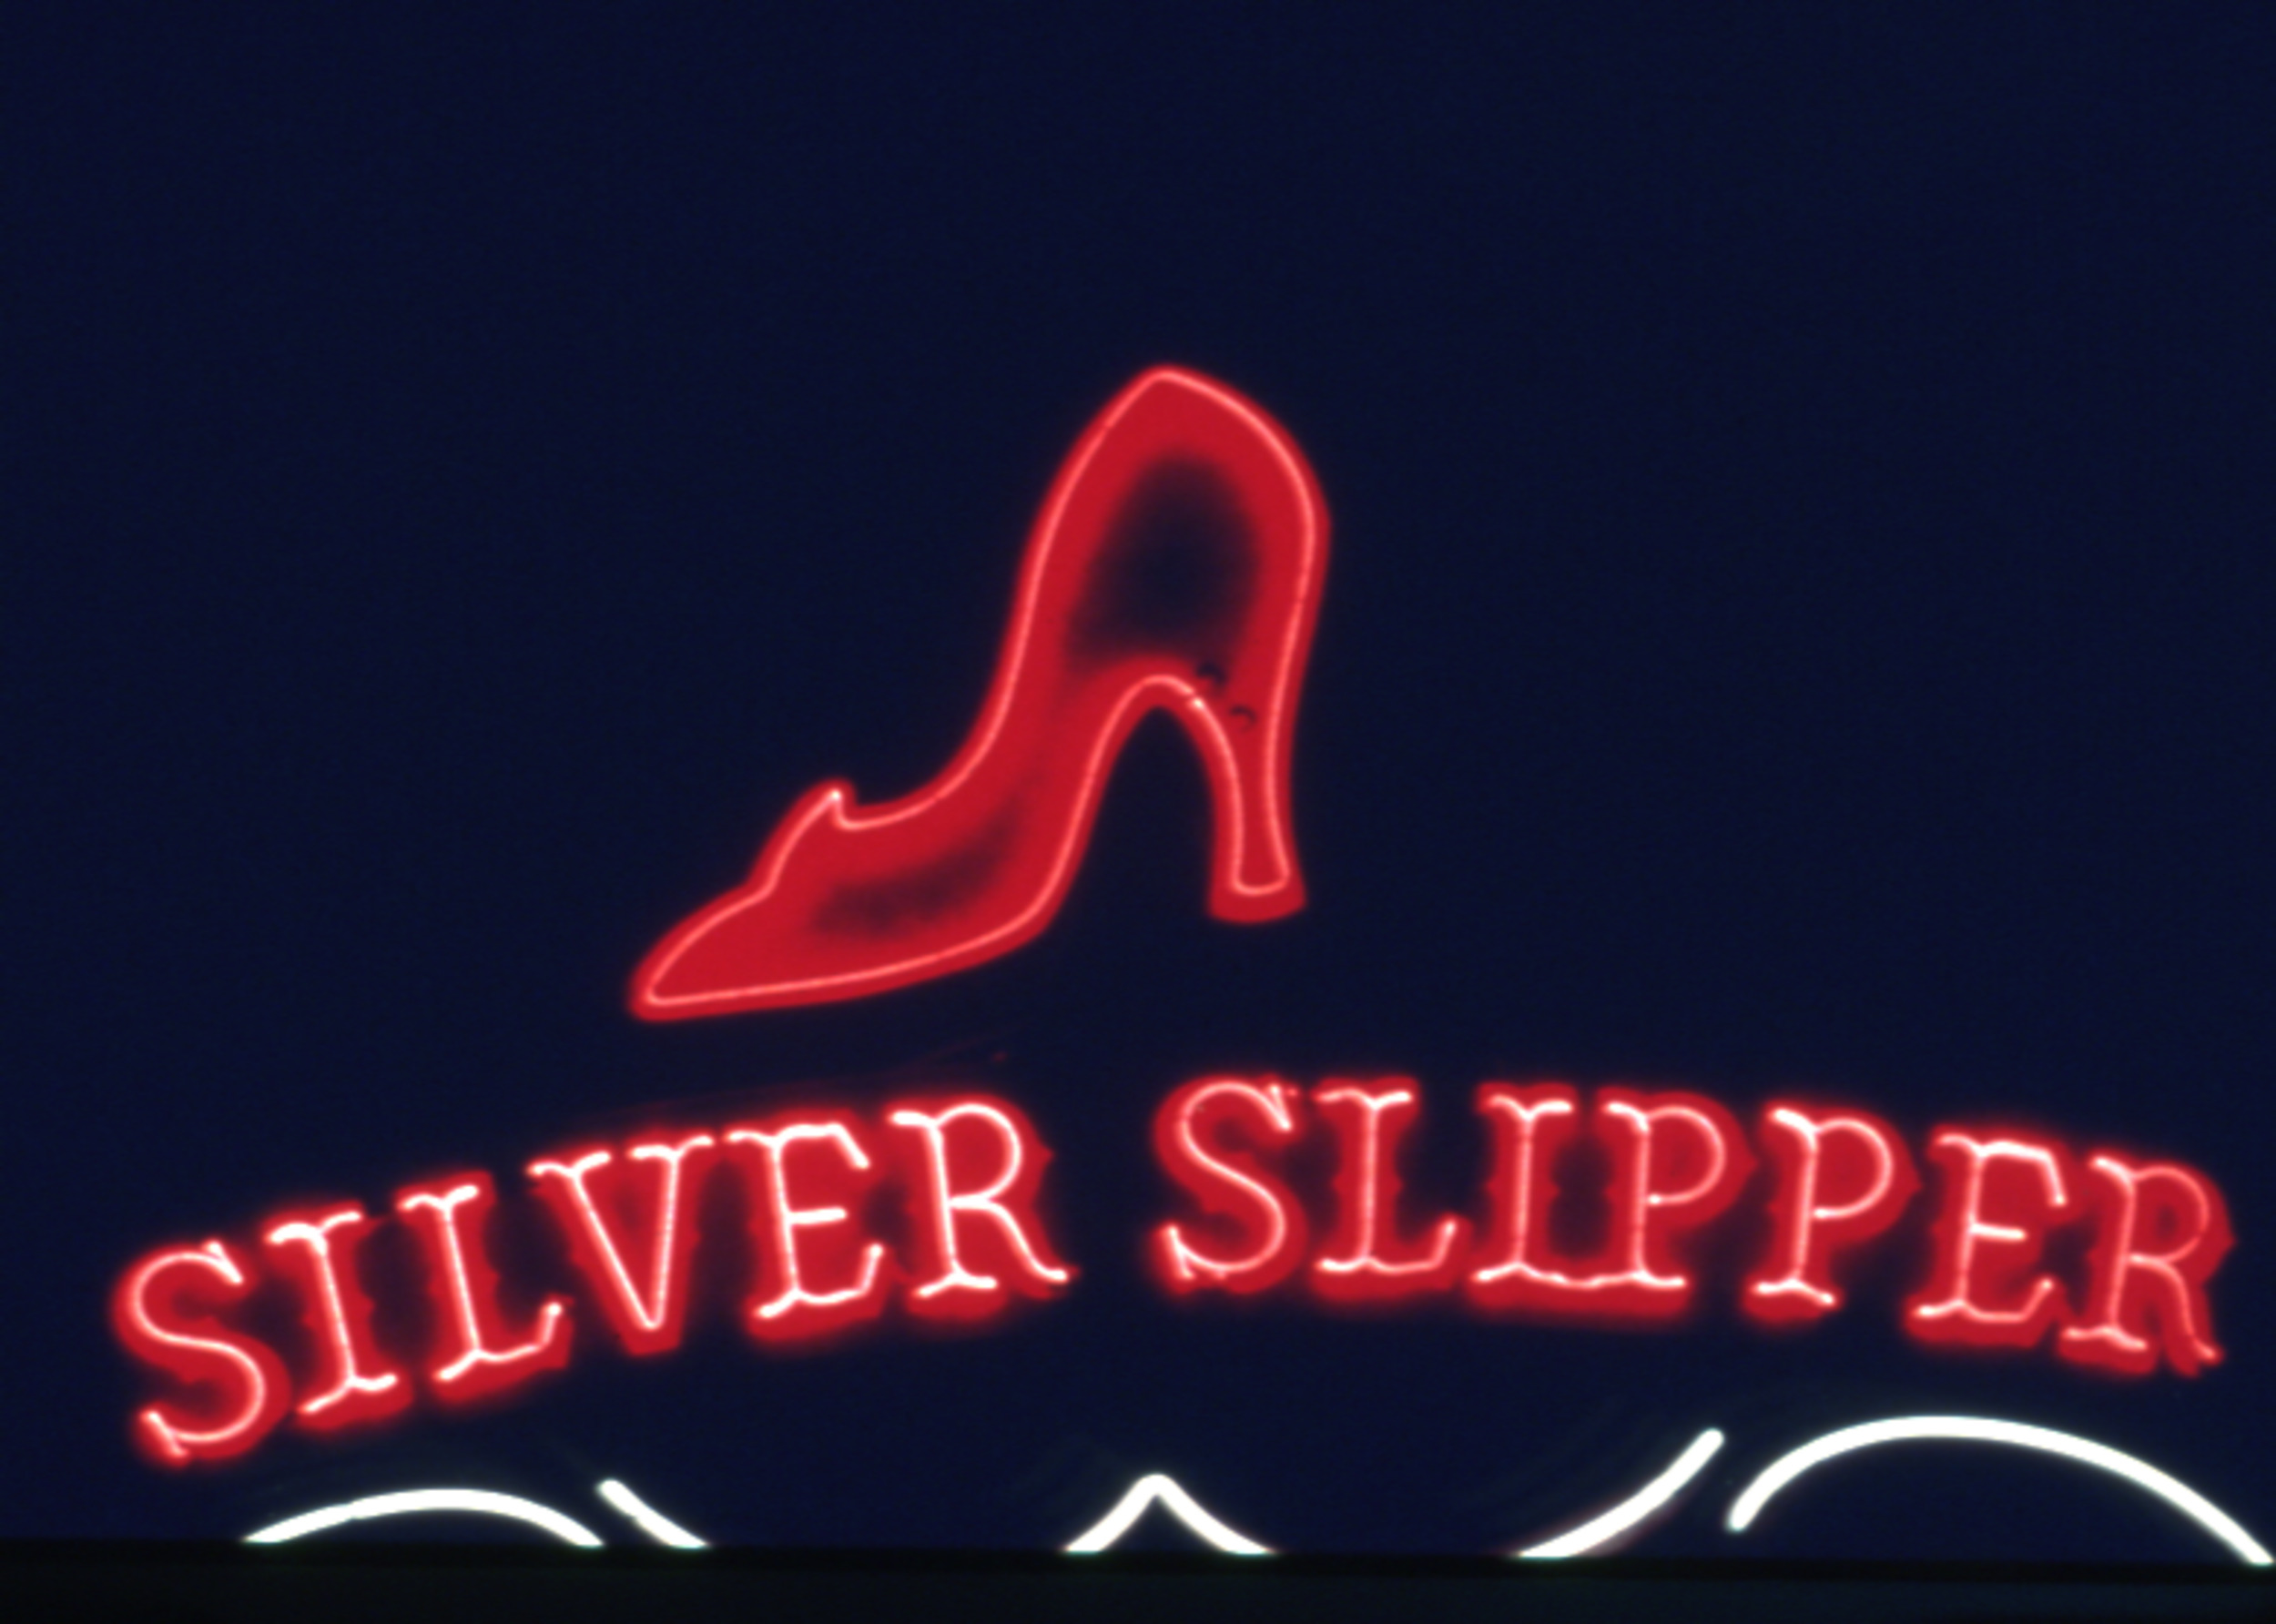 Slide of the Silver Slipper neon sign at night, Las Vegas, Nevada, circa 1980s